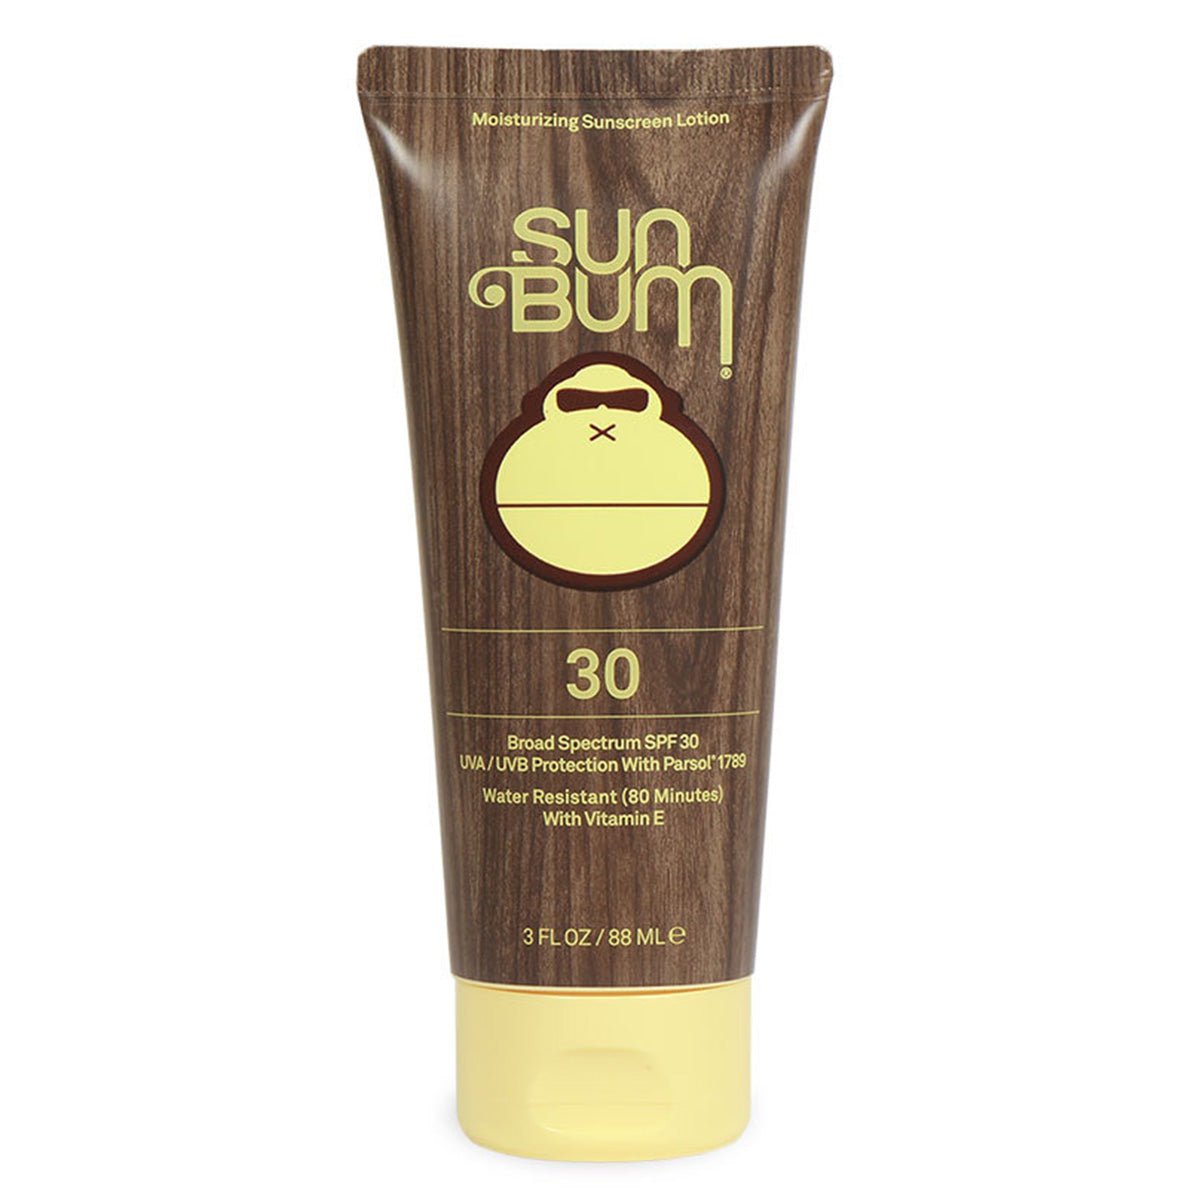 Sun Bum Original Sunscreen Lotion - 3oz - Destination PSP